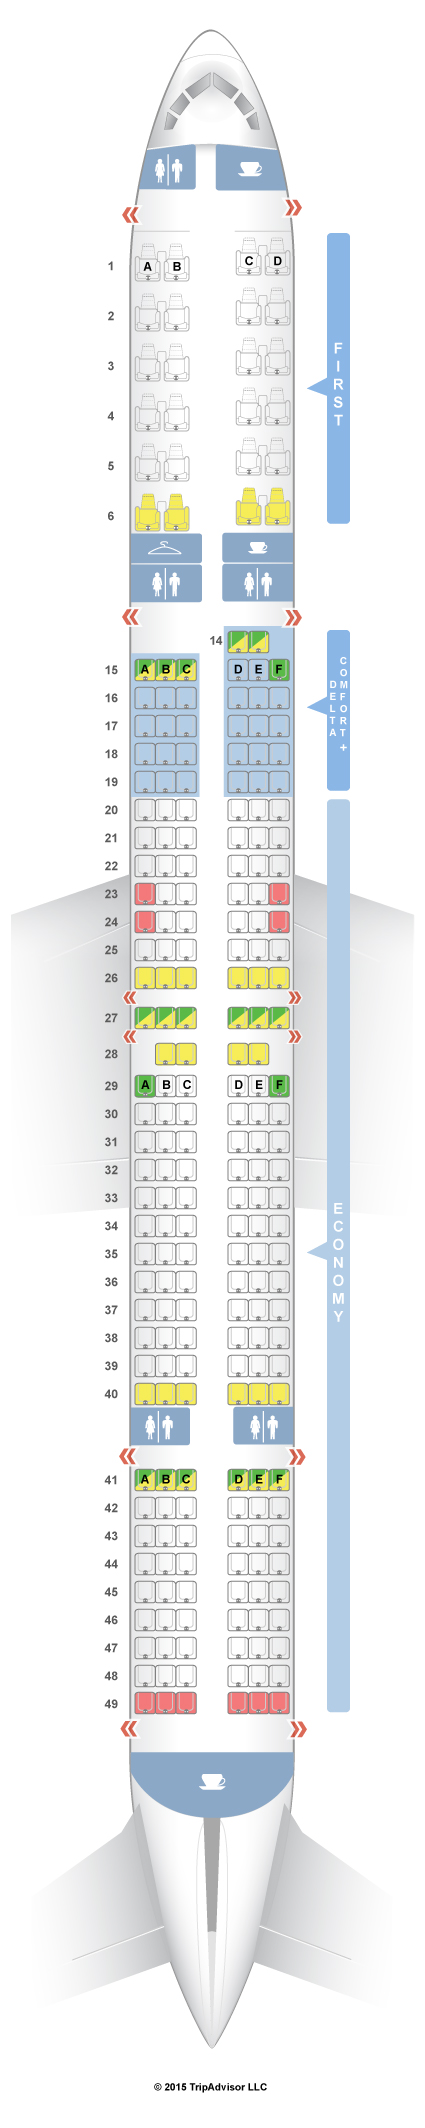 Aer Lingus Seating Chart 757